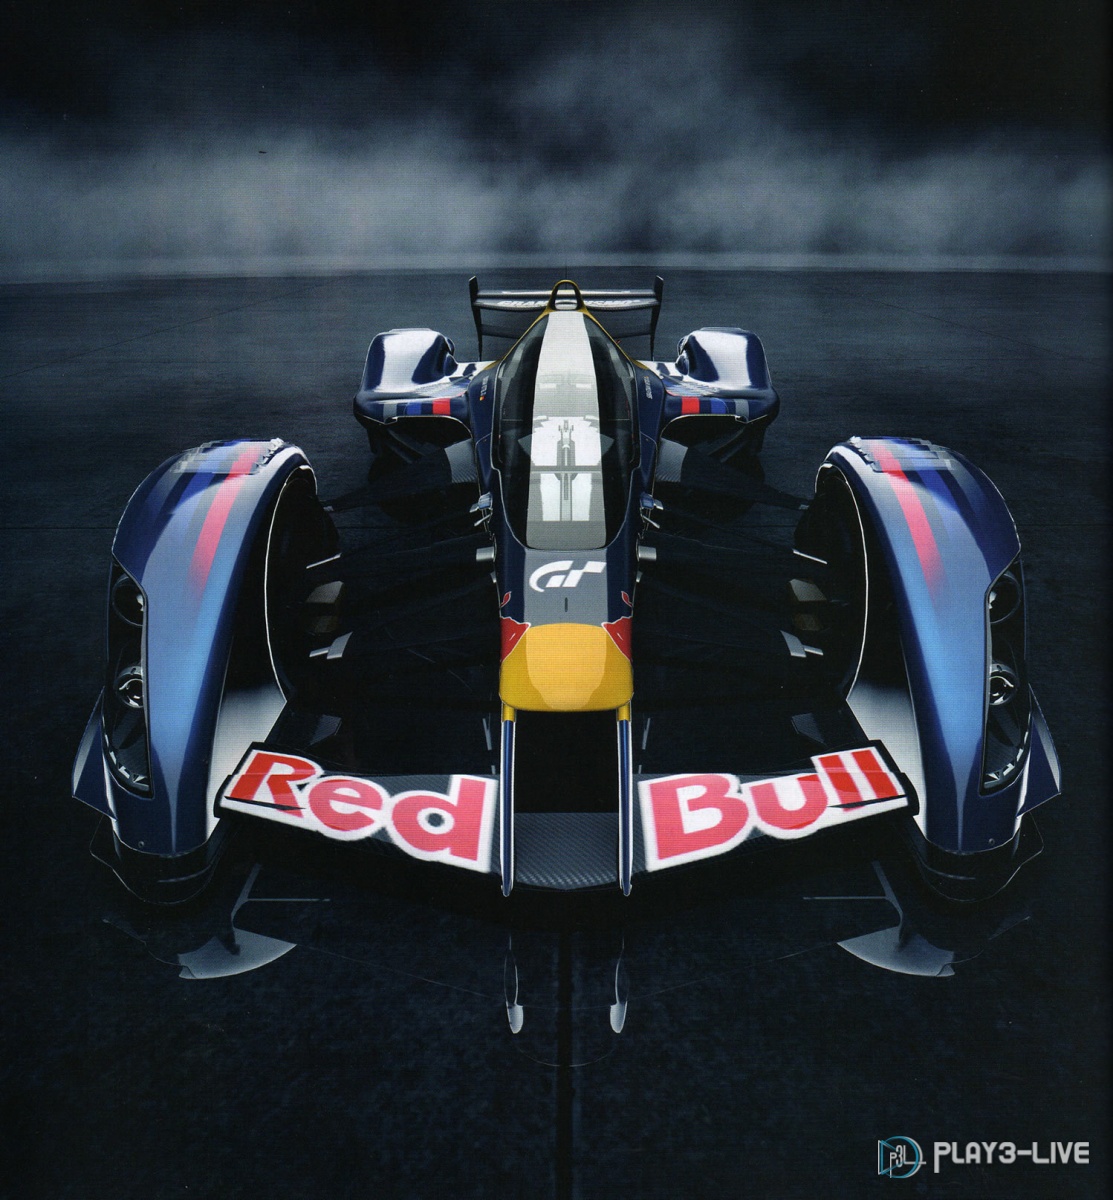 Red Bull X1 Prototype dvoile
Dans le jeu vido Gran Turismo 5

